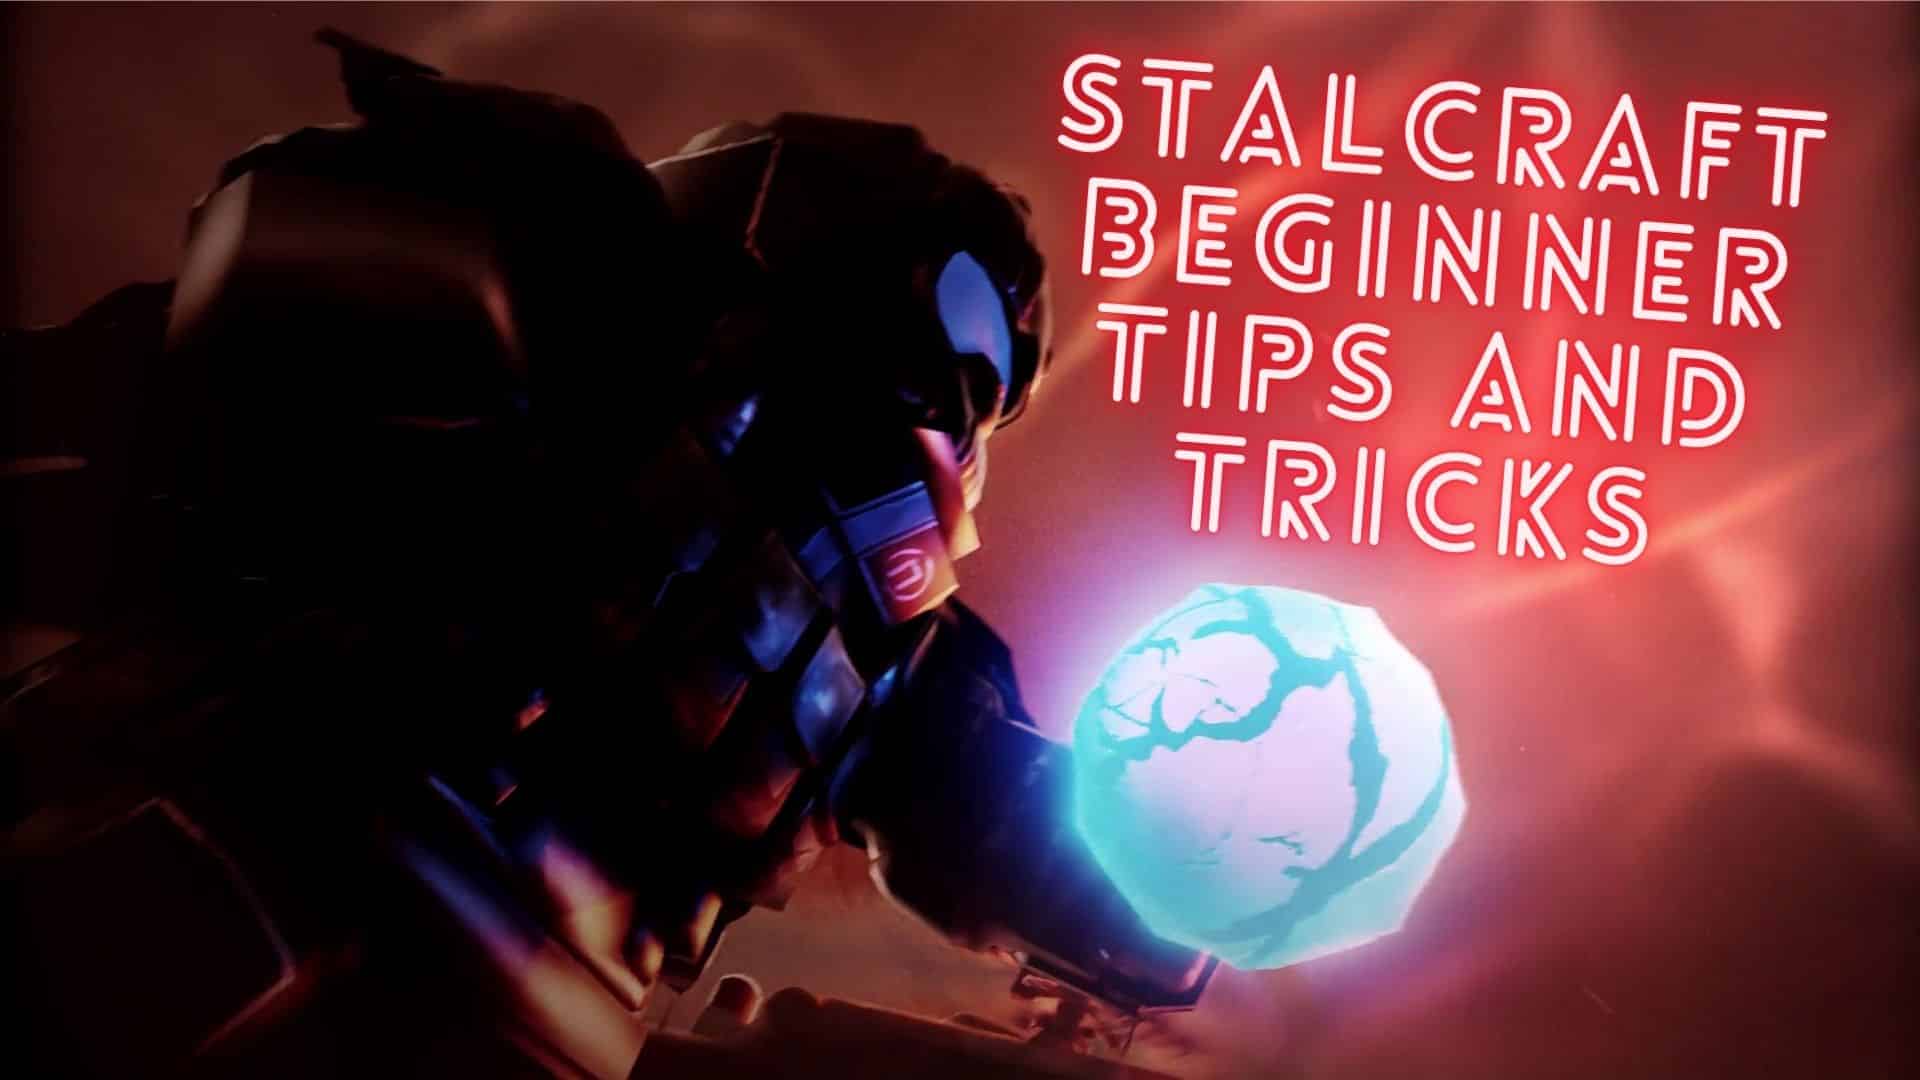 Stalcraft Beginner Tips and Tricks